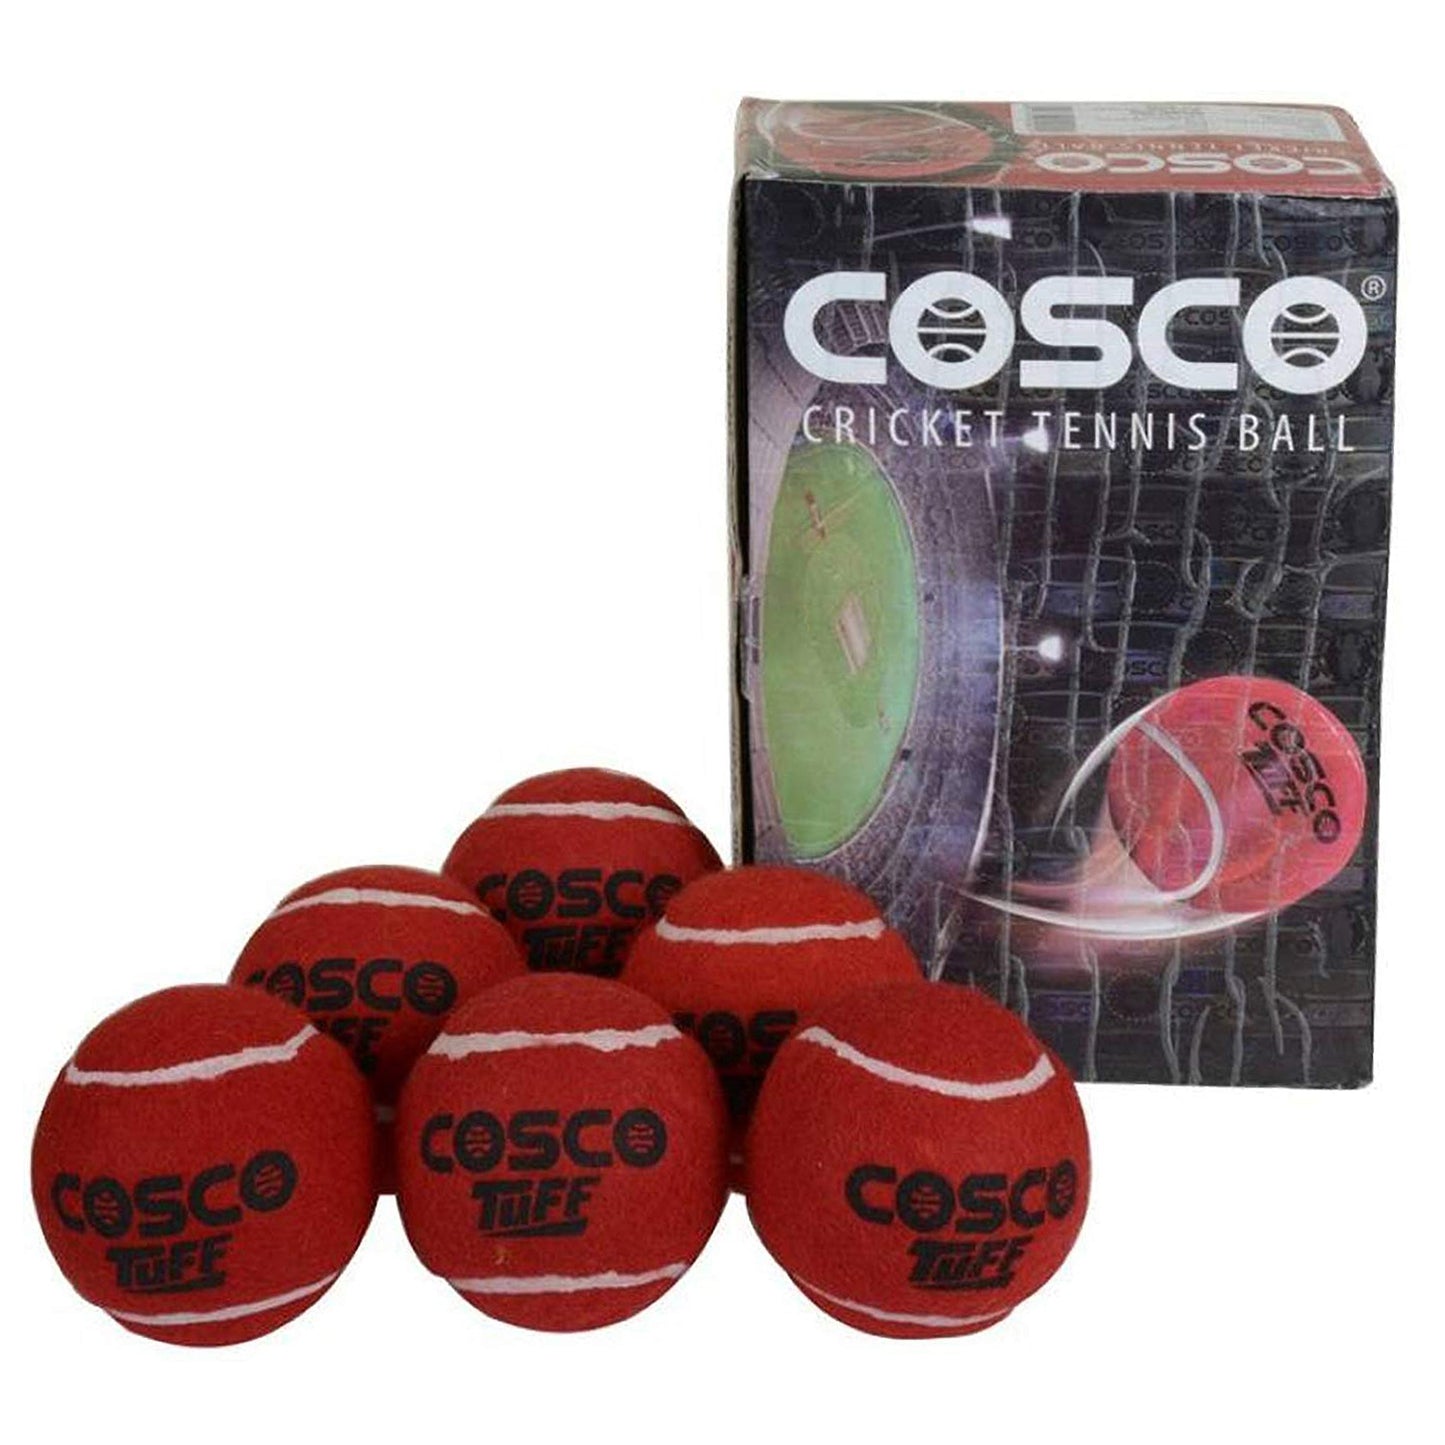 Cosco Tuff Heavy Weight Tennis Cricket Ball, Pack of 6 (Red) - Best Price online Prokicksports.com